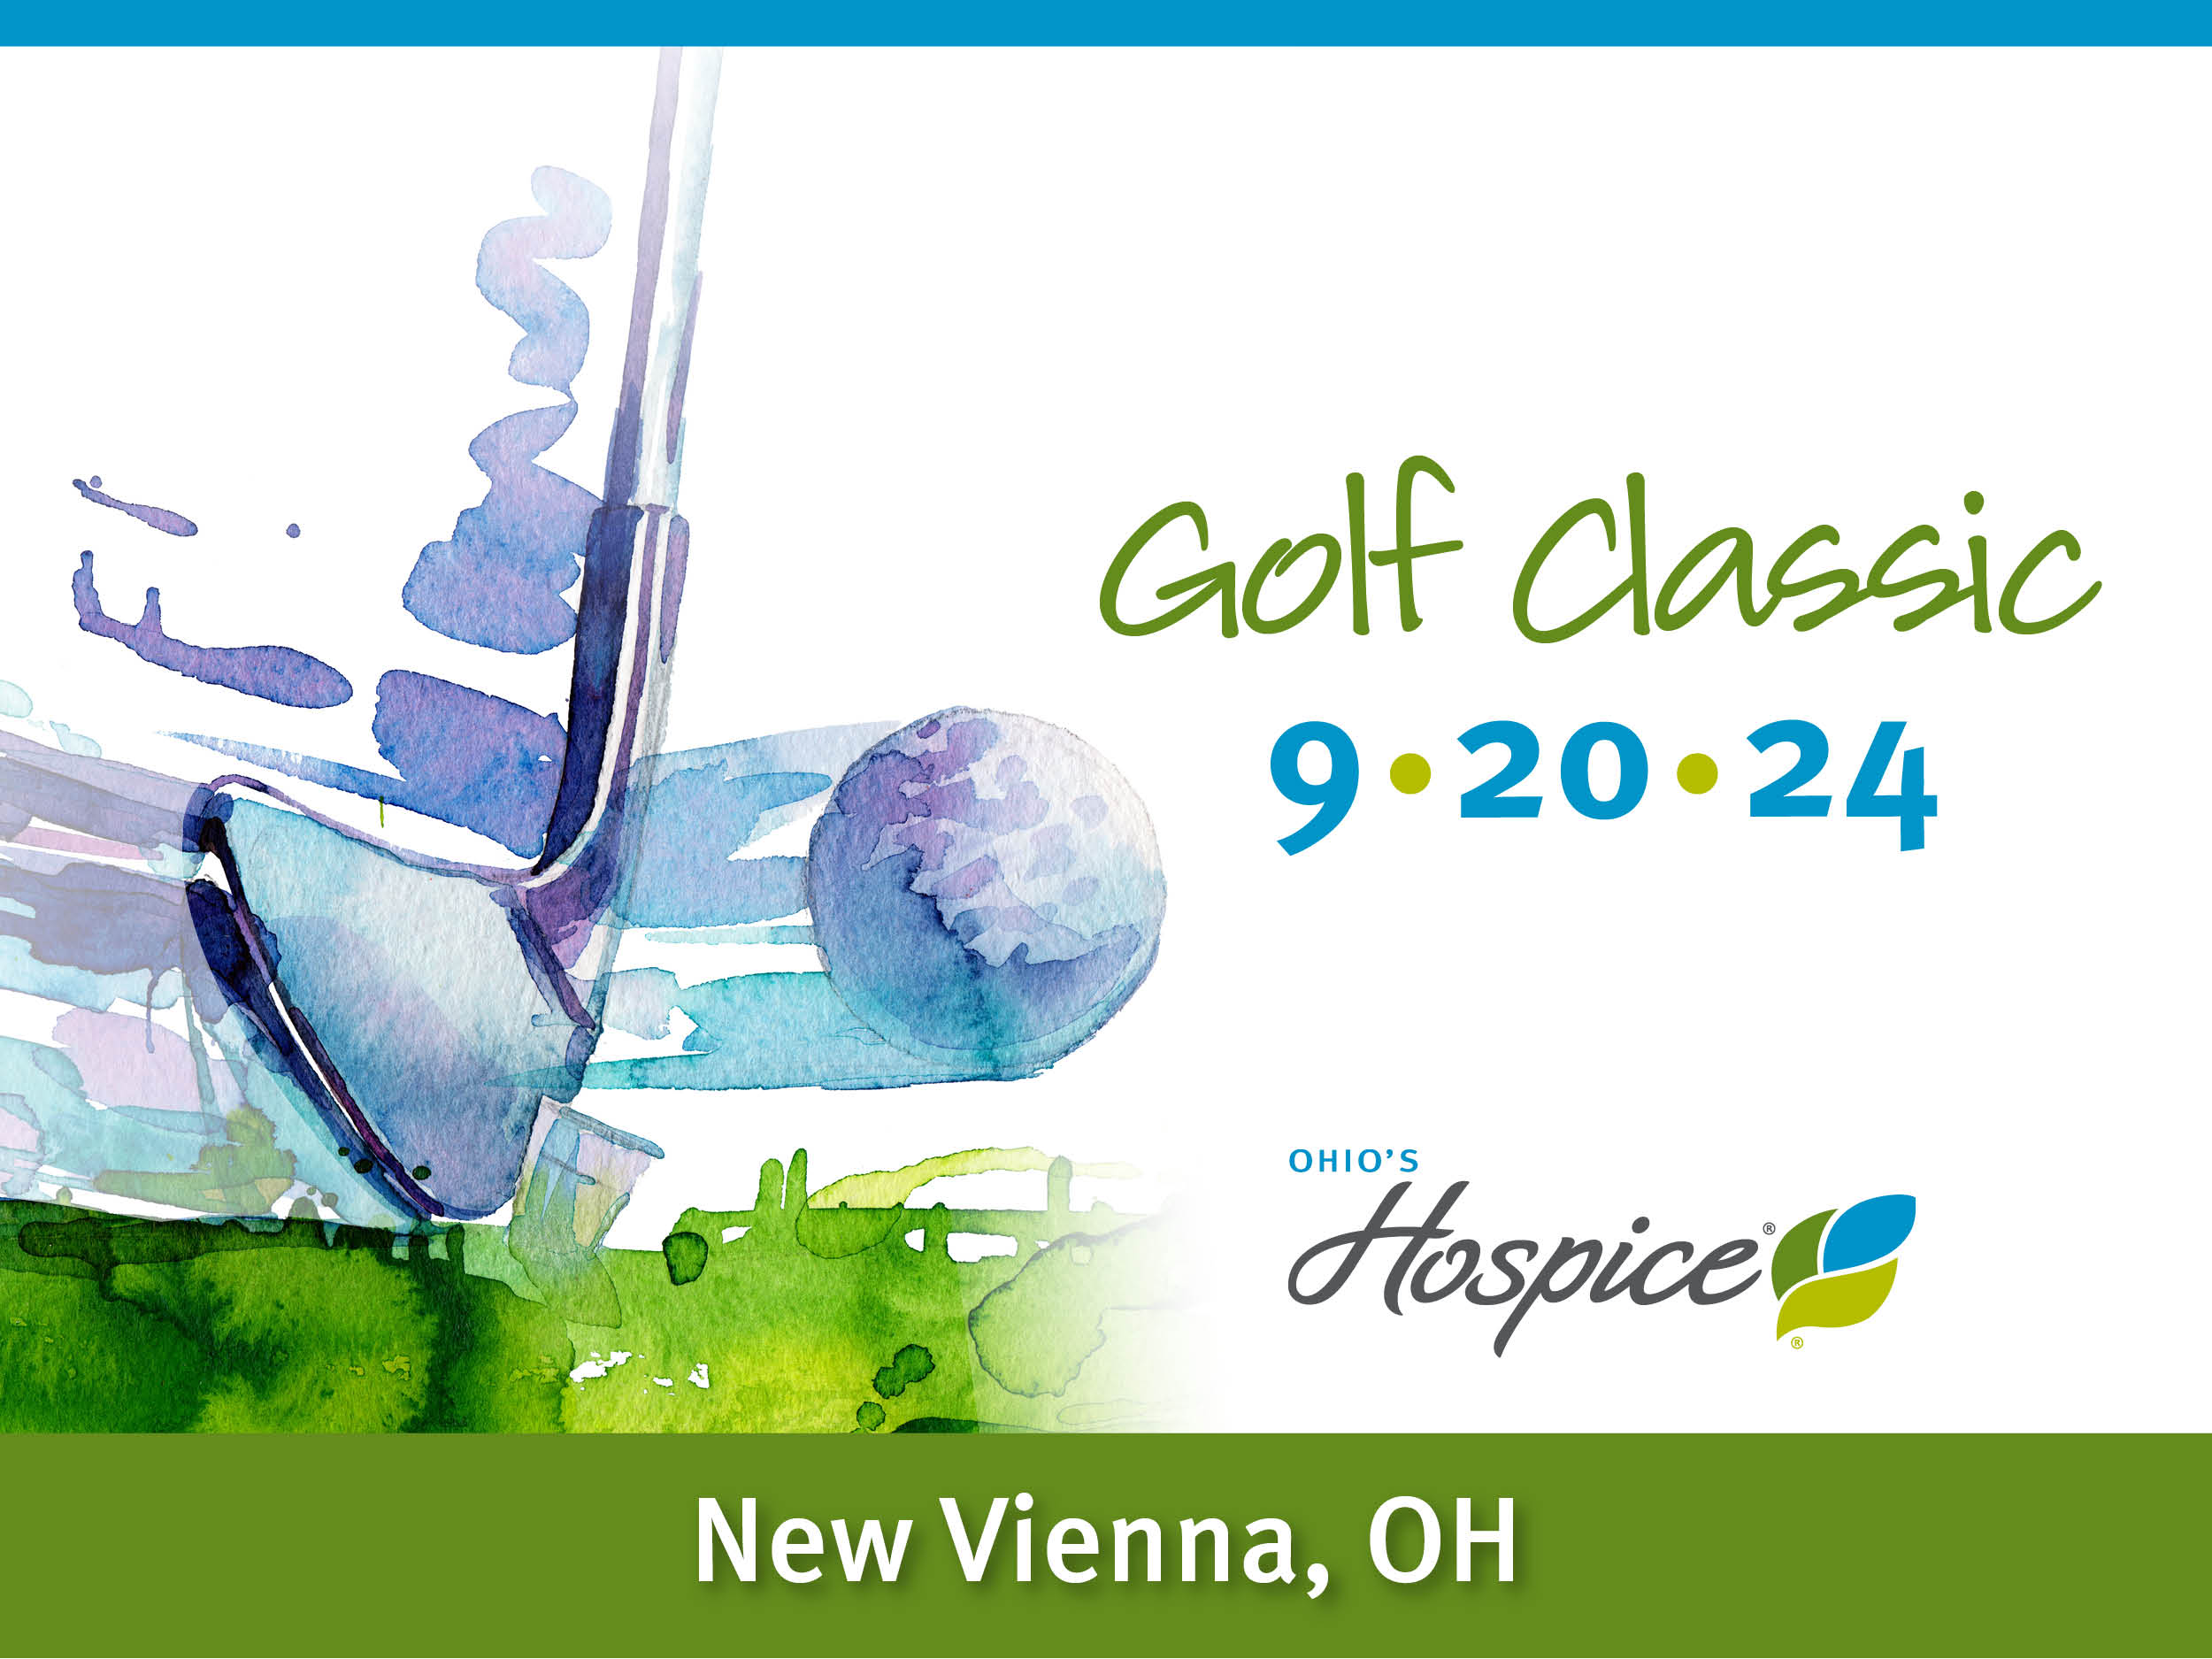 Golf Classic 9.20.24 New Vienna, OH